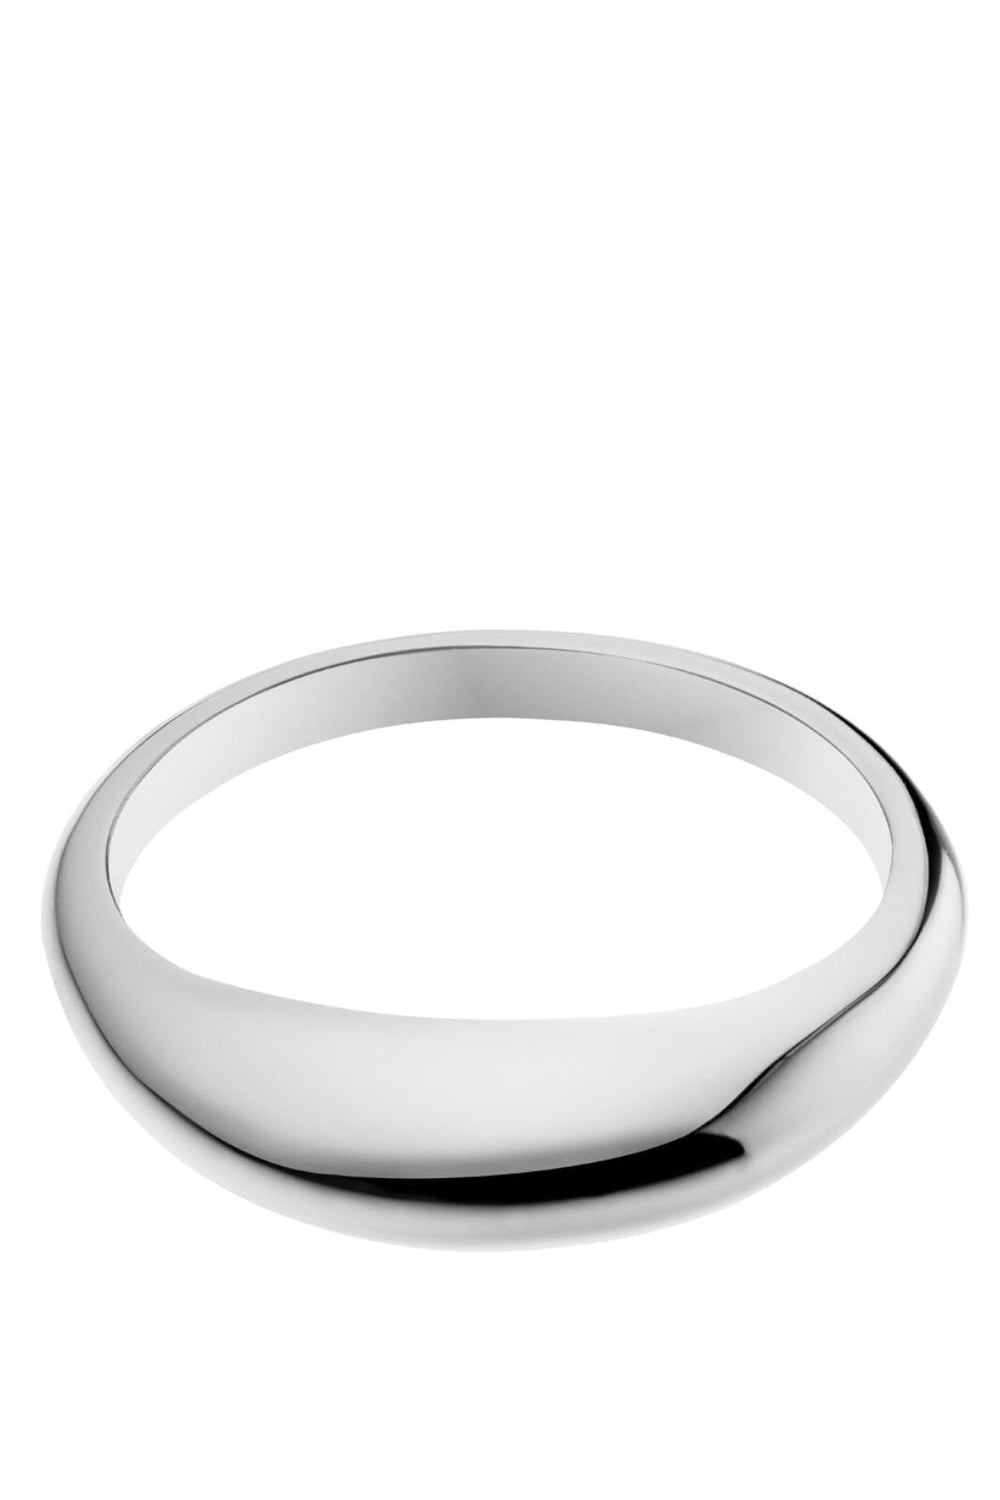 Pernille Corydon Jewellery - Globe Ring - Silver Ringe 